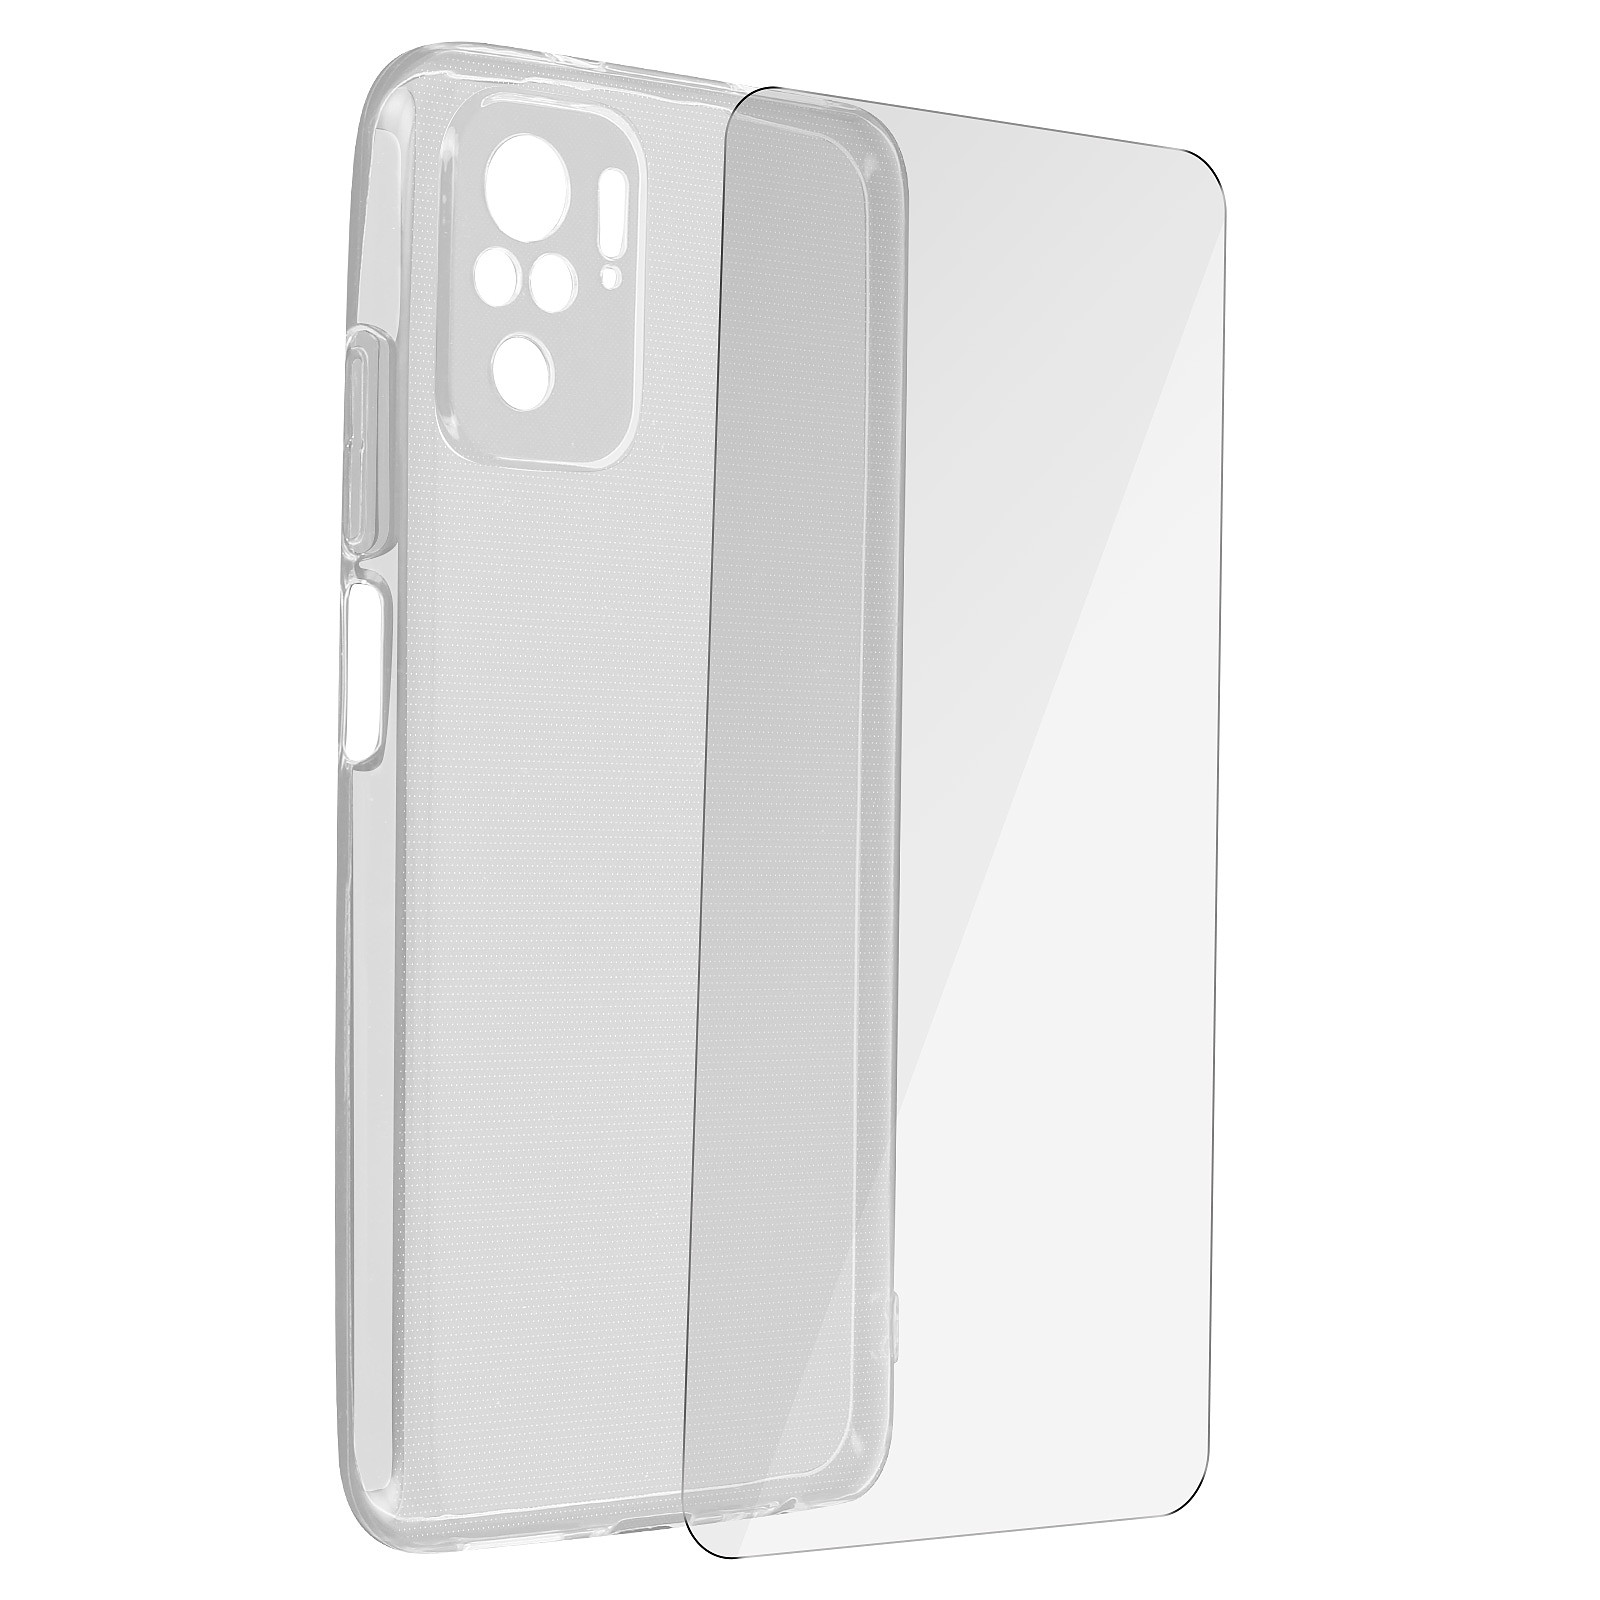 Avizar Coque pour Xiaomi Redmi Note 10s / Note 10 Souple et Film Verre Trempe Durete 9H Transparent - Coque telephone Avizar